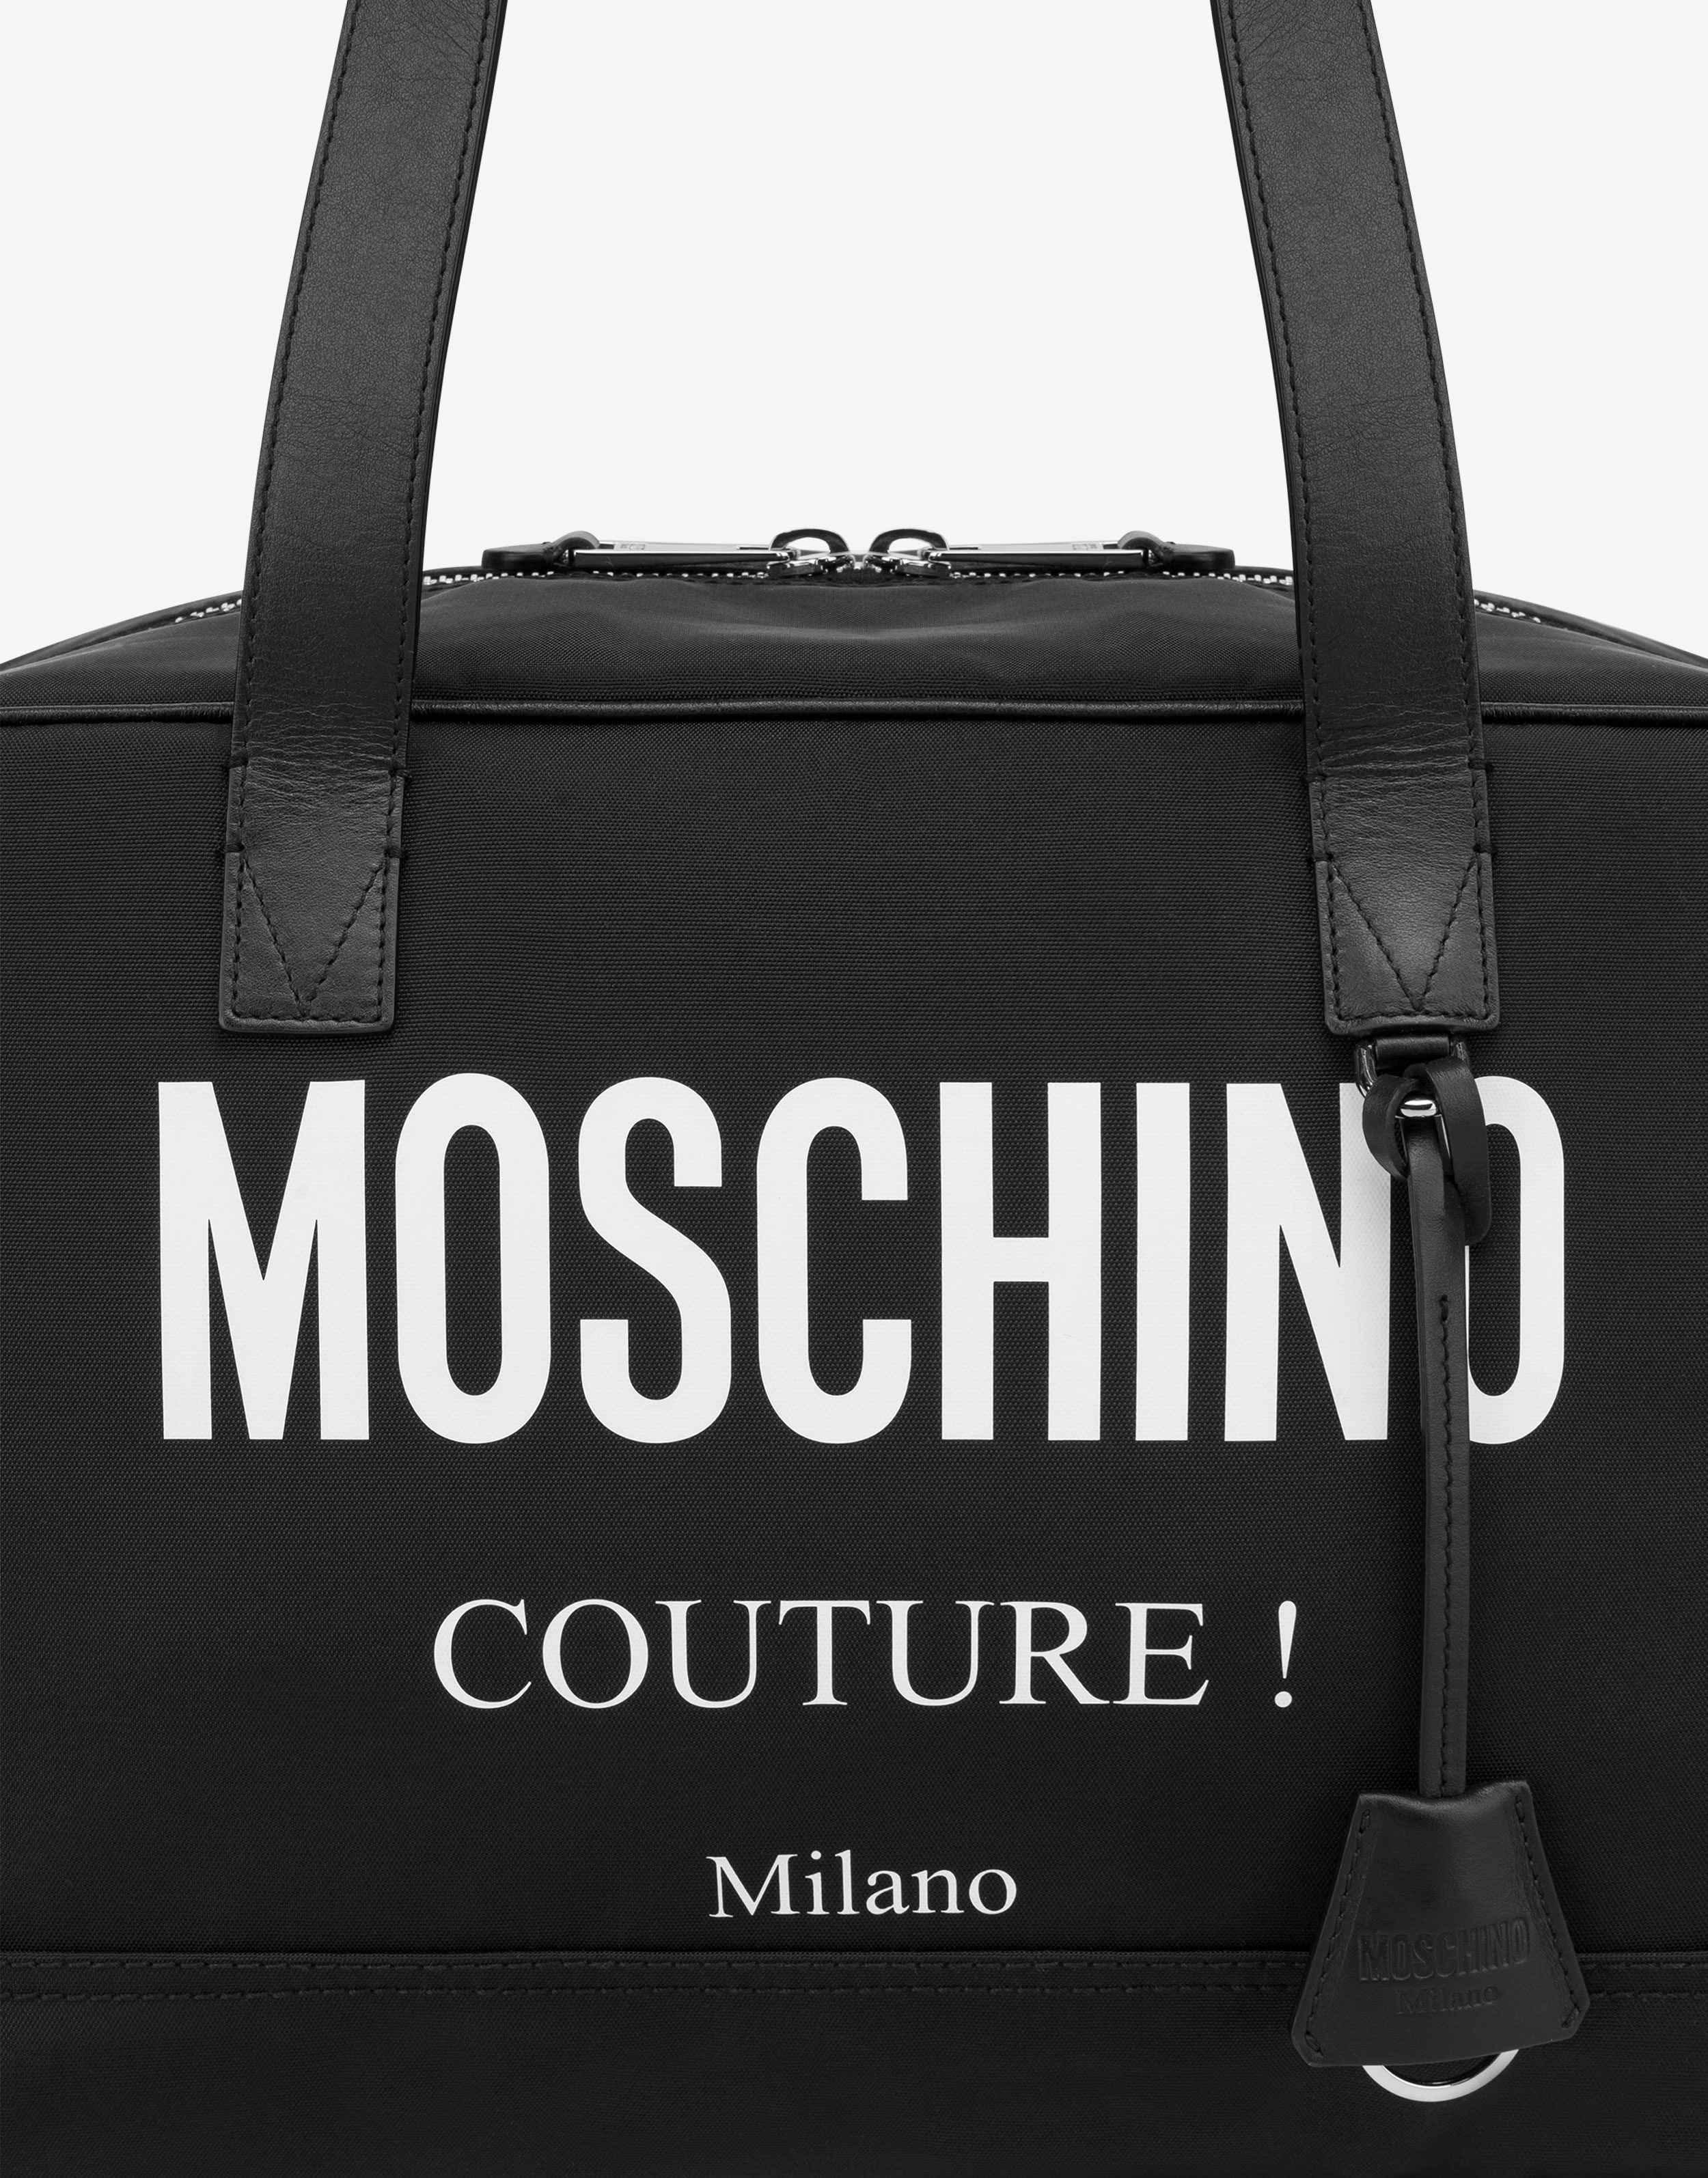 Moschino Couture nylon travel bag 2